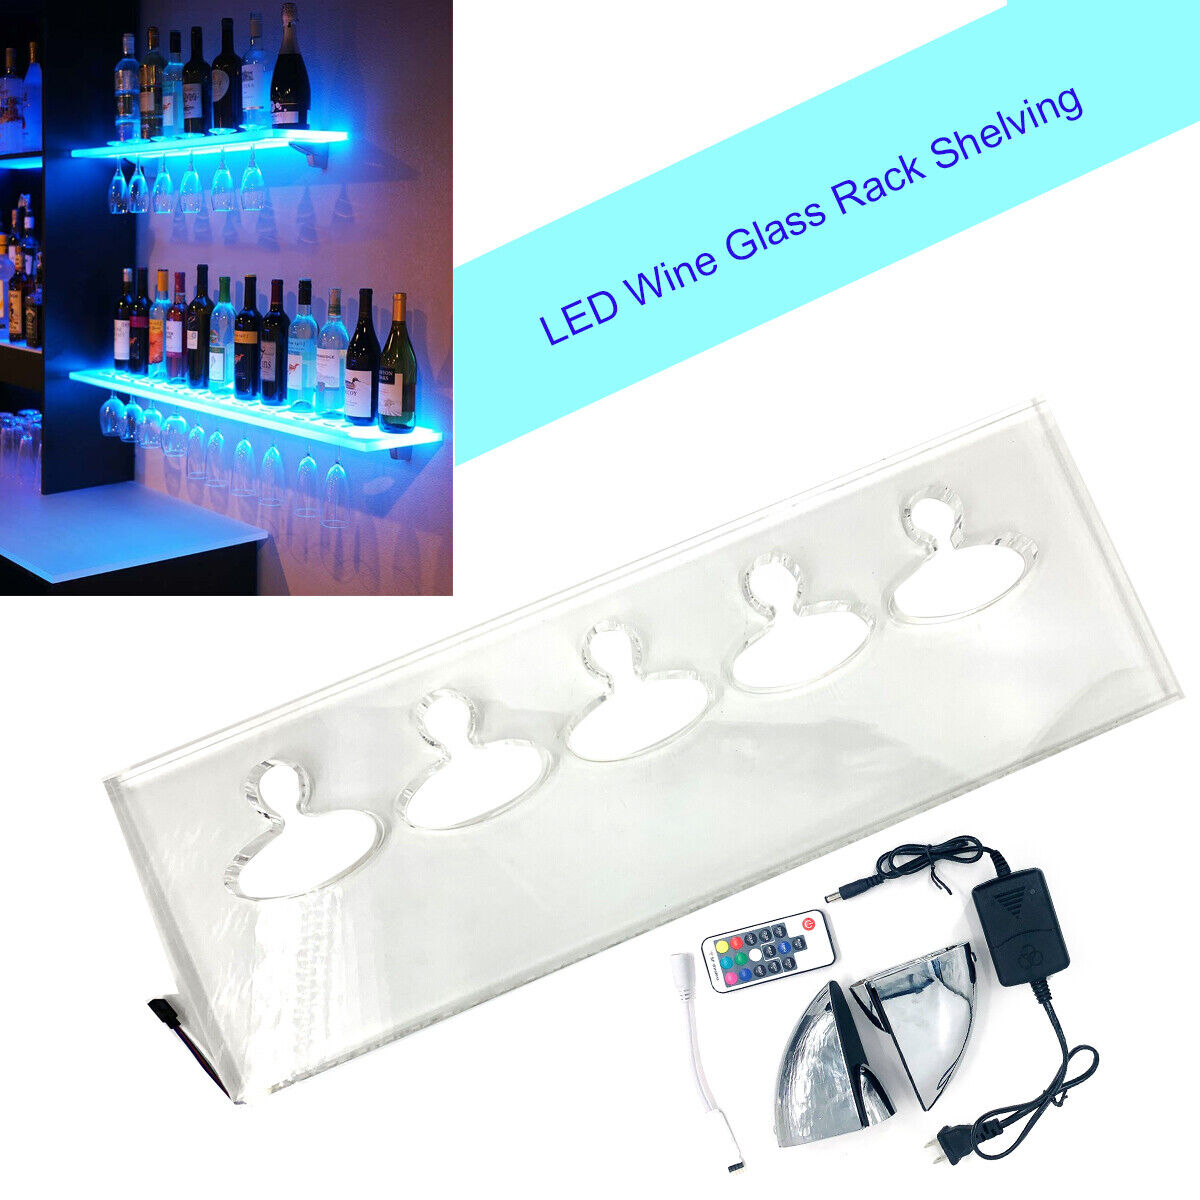 23" Wall Mounted Led Lighted Shelf Liquor Bottle Bar Display Stand +glass Holder